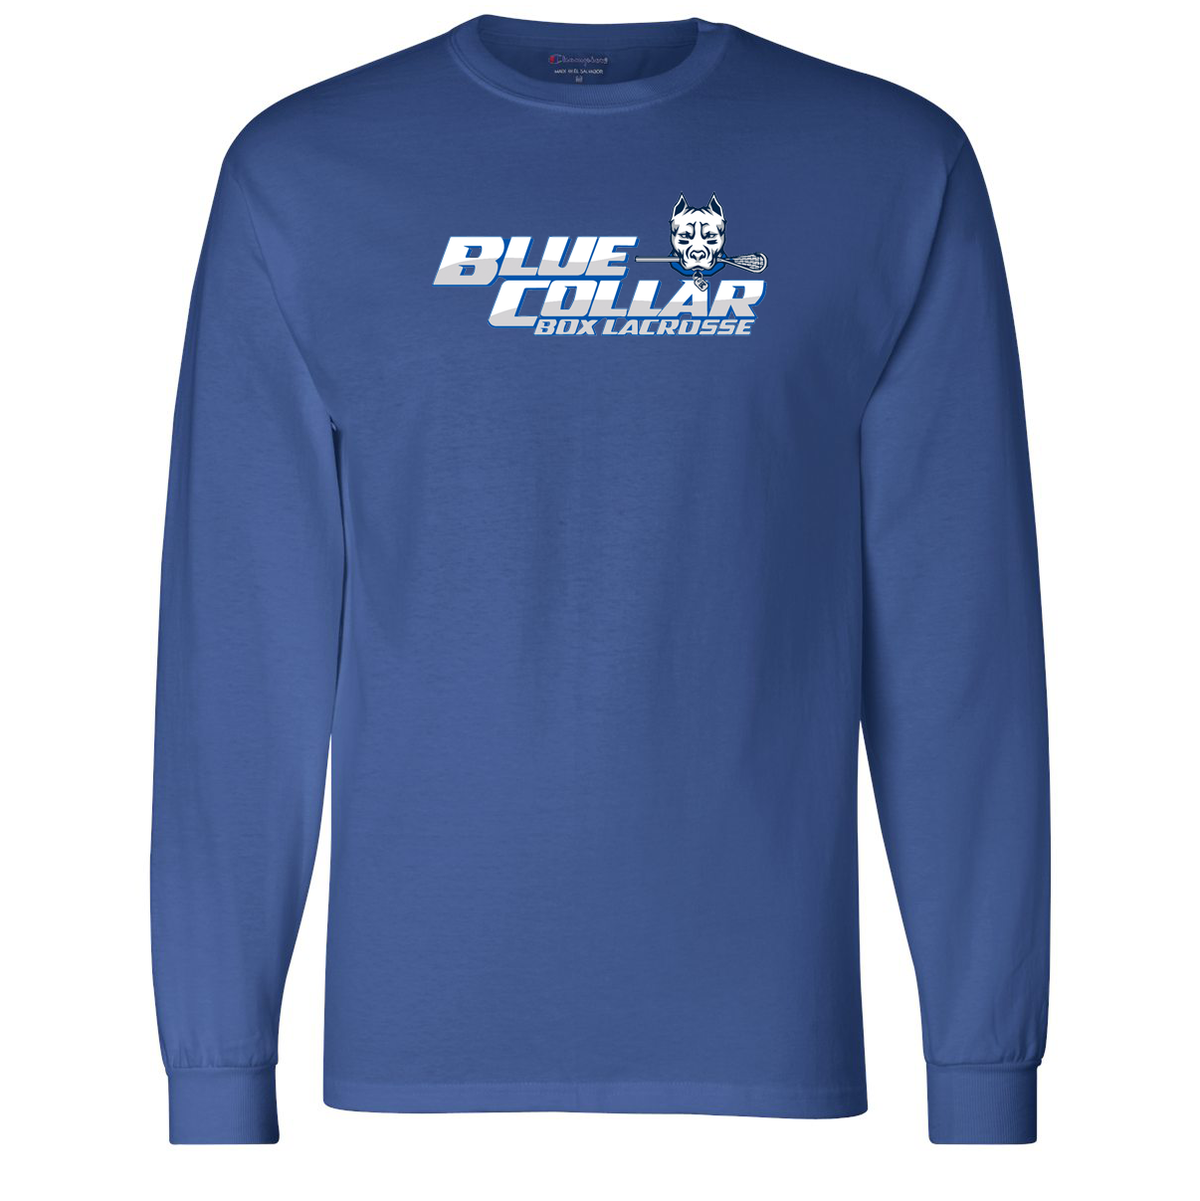 Blue Collar Box Lacrosse Champion Long Sleeve T-Shirt